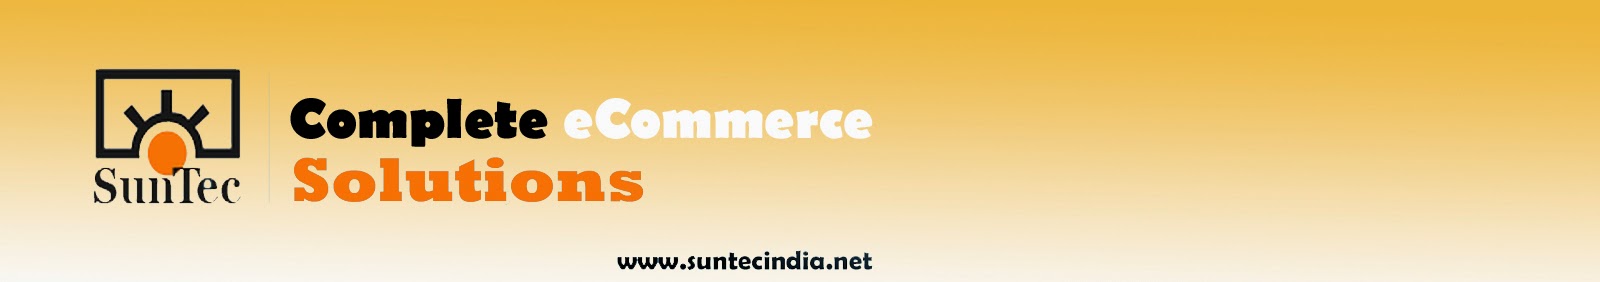 eCommerce Store